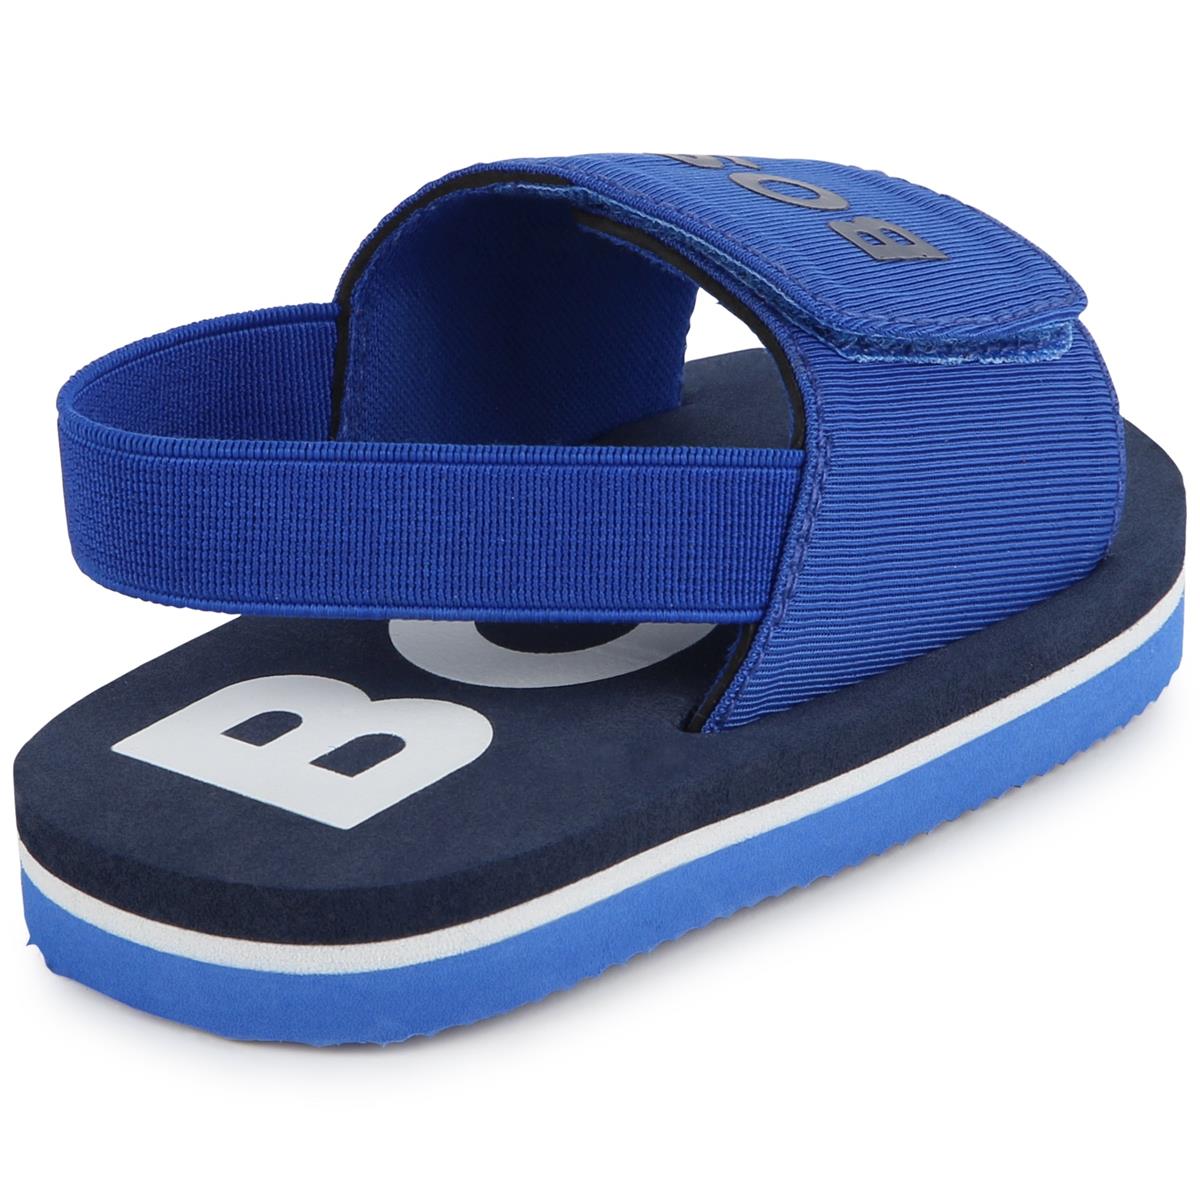 Baby Boys Blue Sandals